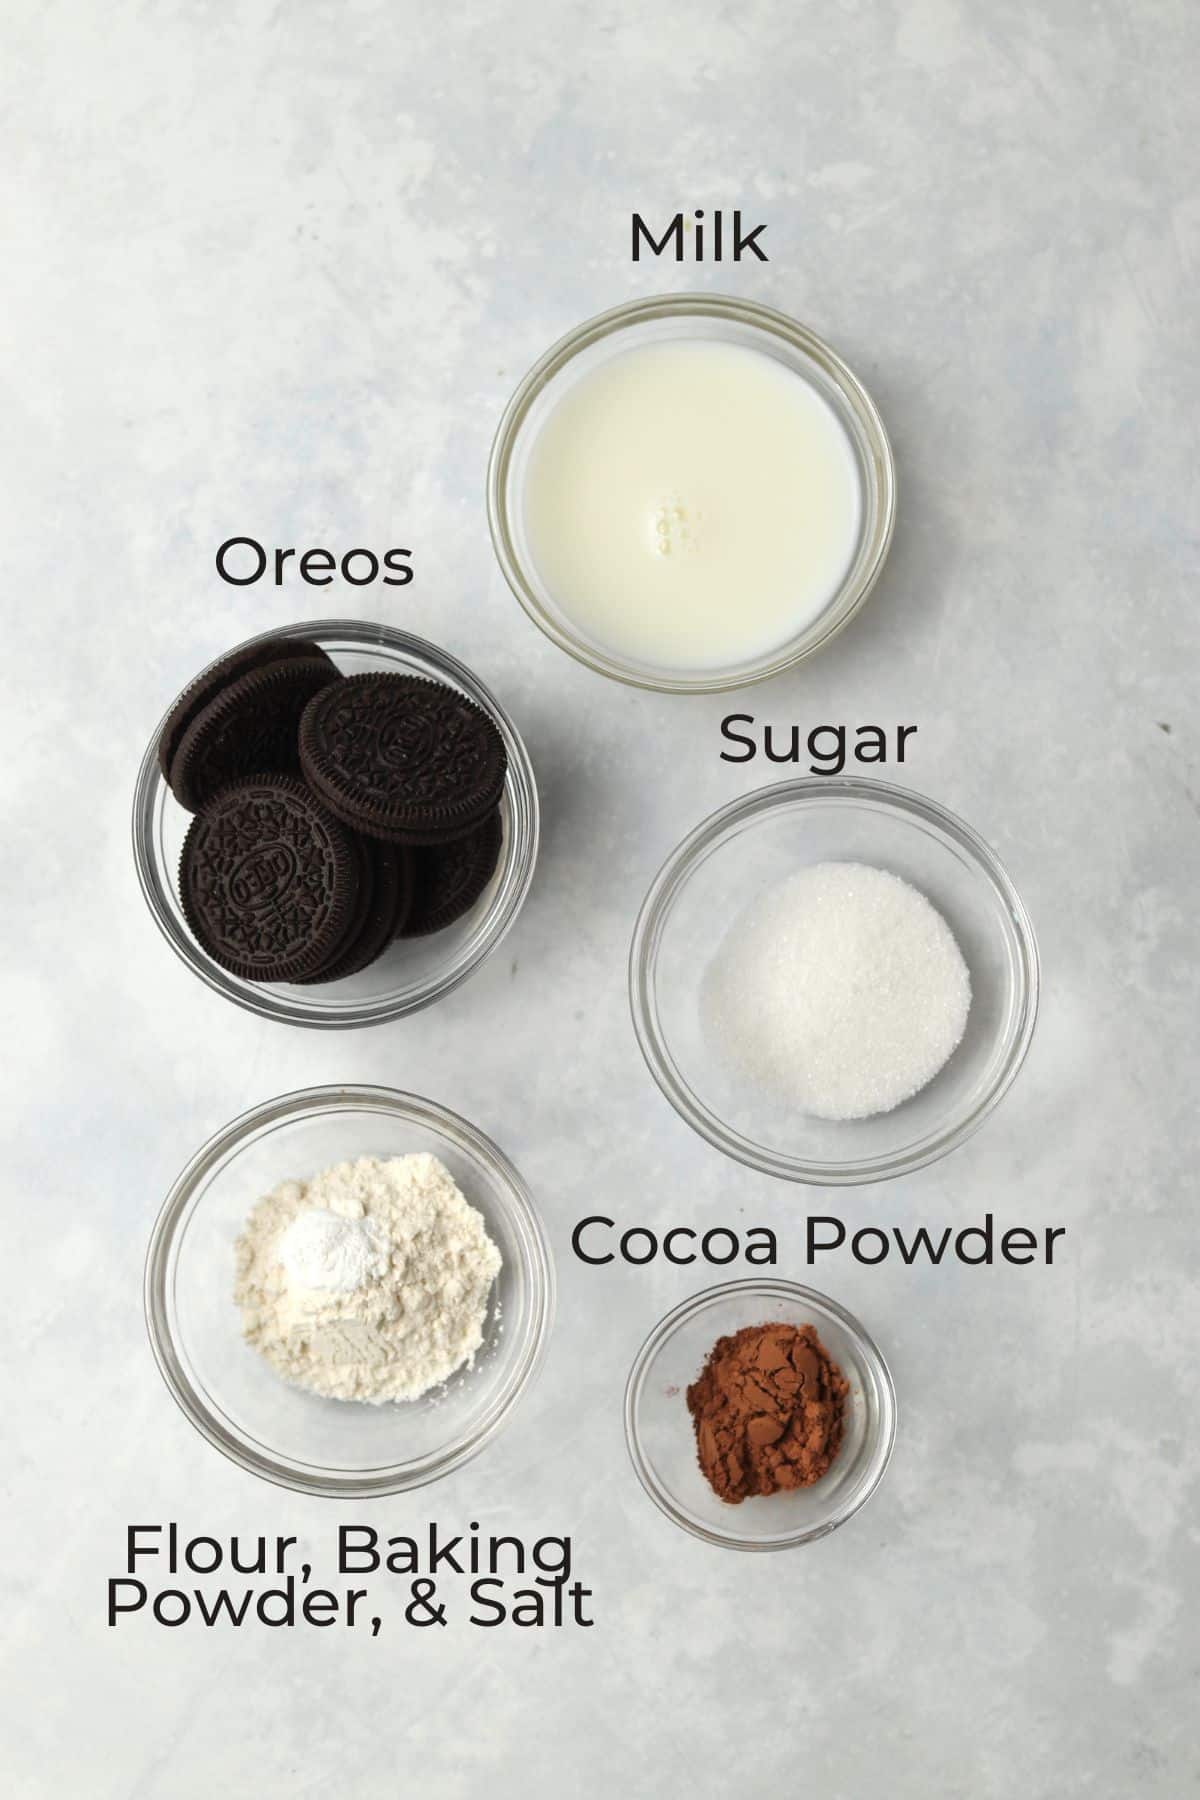 oreos, milk, sugar, flour, baking powder, salt, and cocoa powder in small bowls